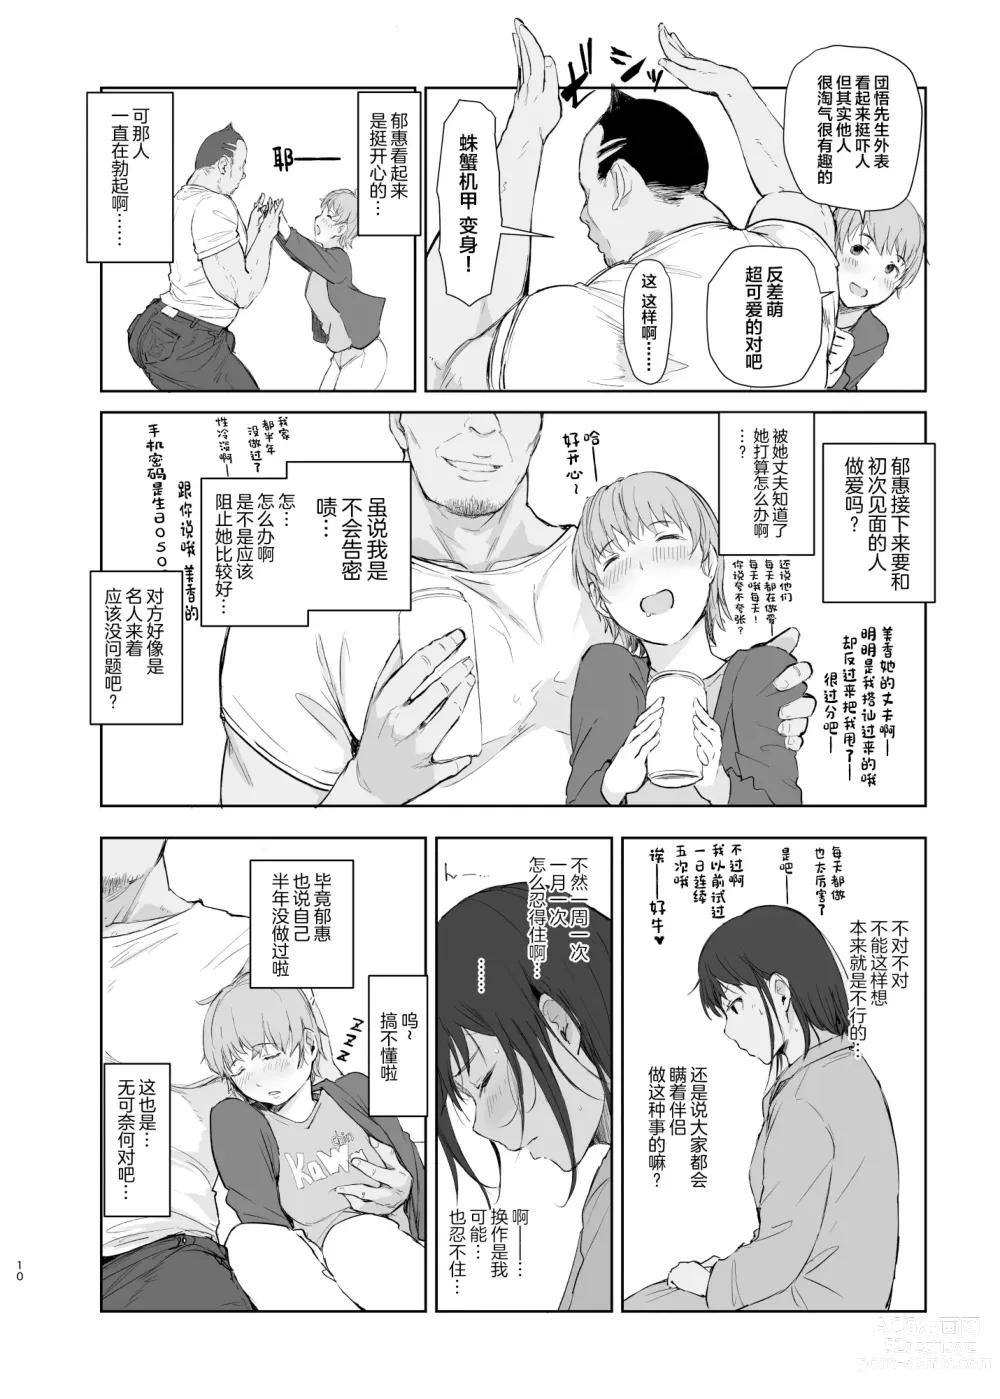 Page 9 of doujinshi Hitodzuma Futari NTR no Tabi